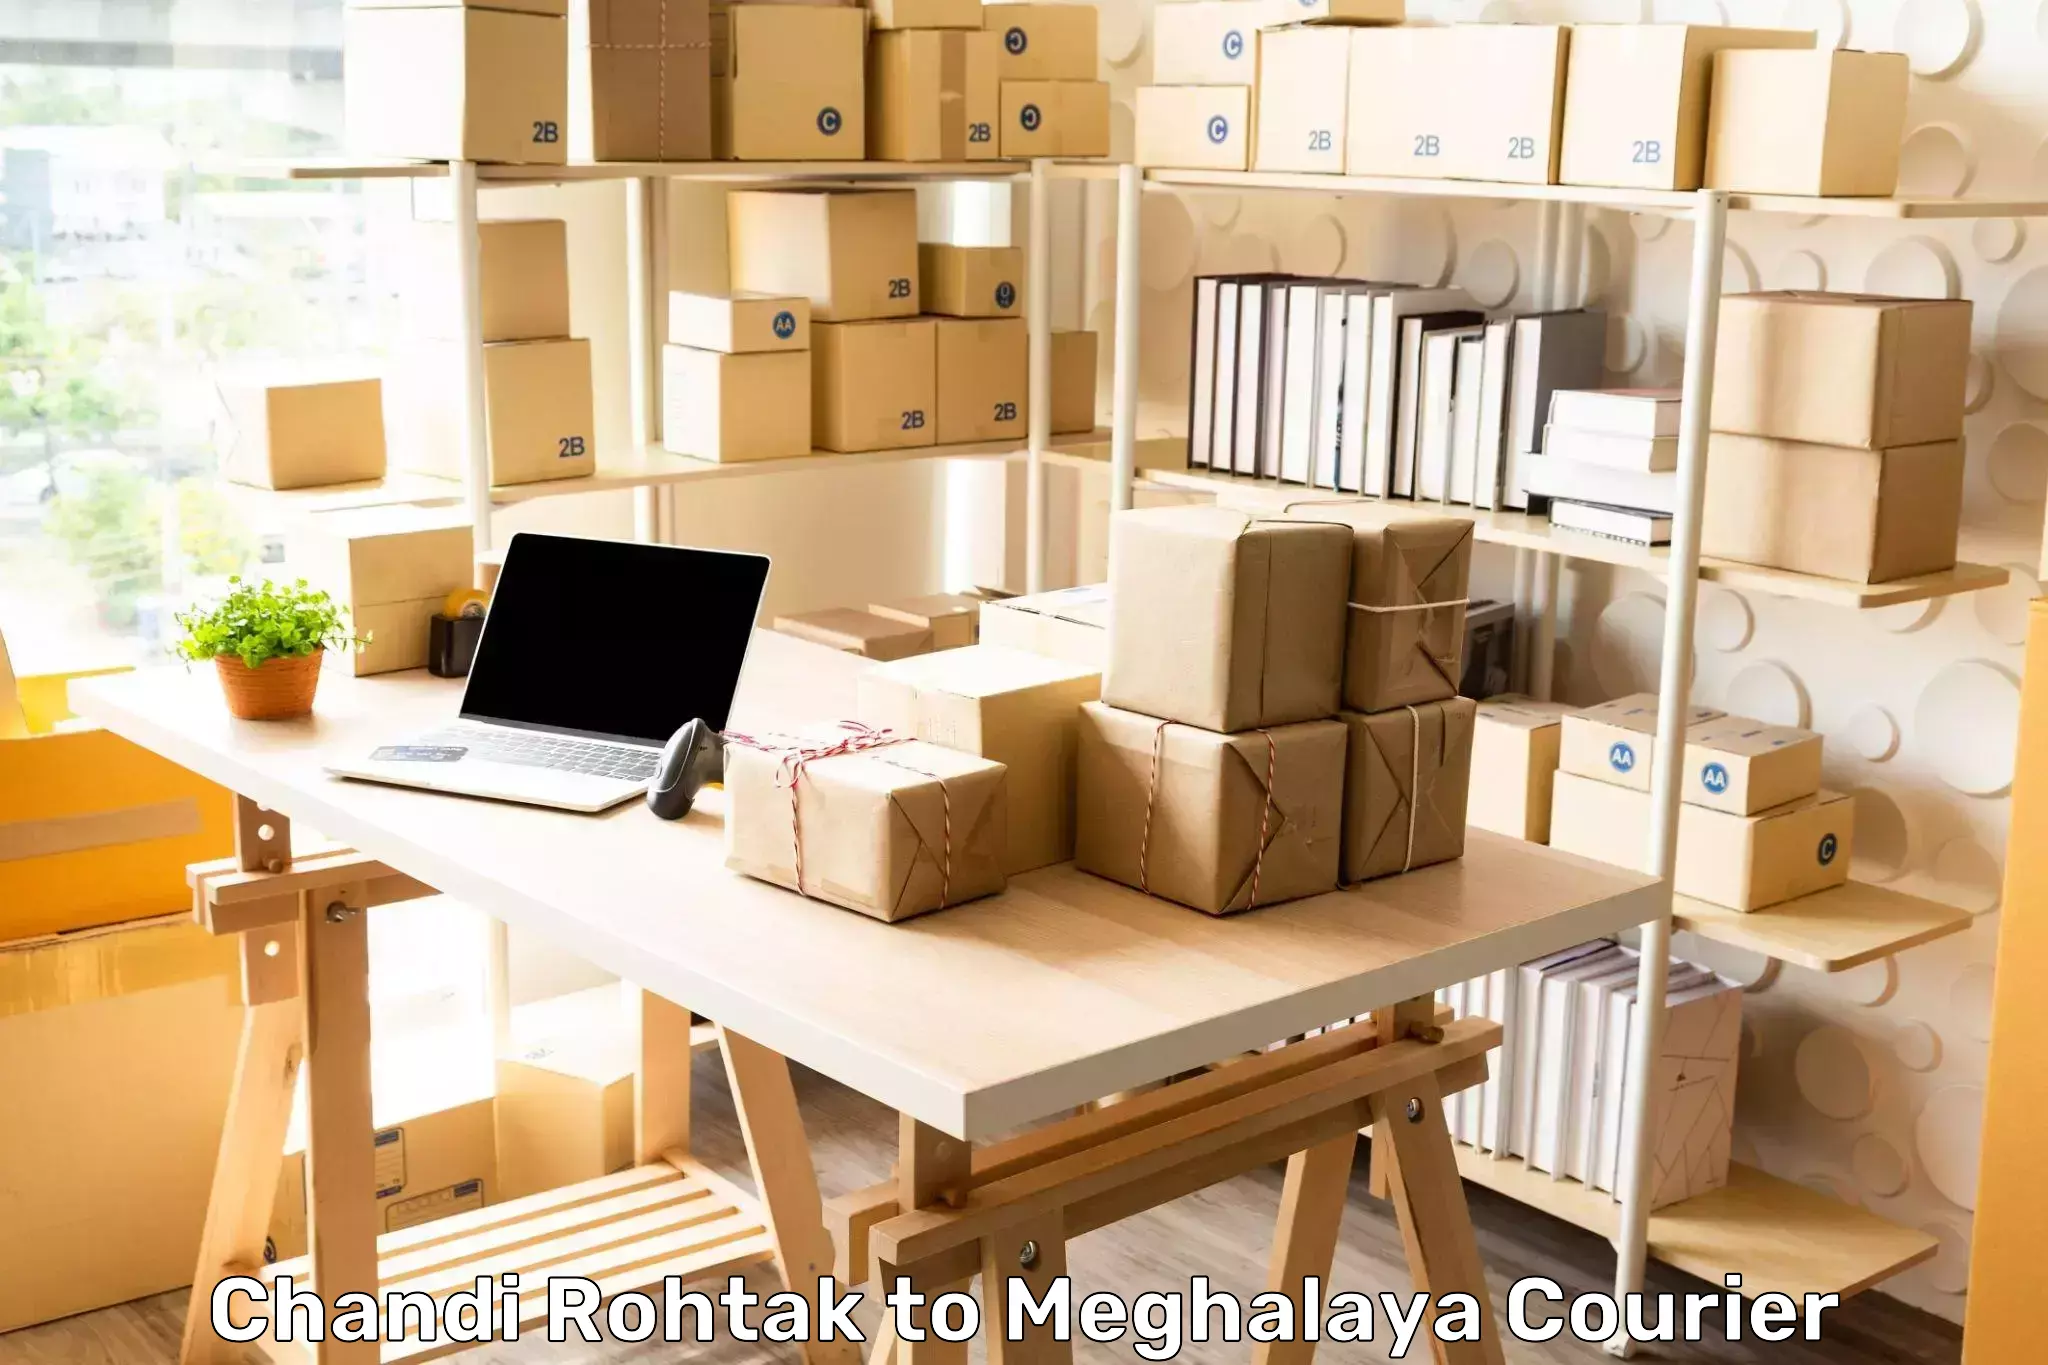 Flexible delivery schedules Chandi Rohtak to Meghalaya